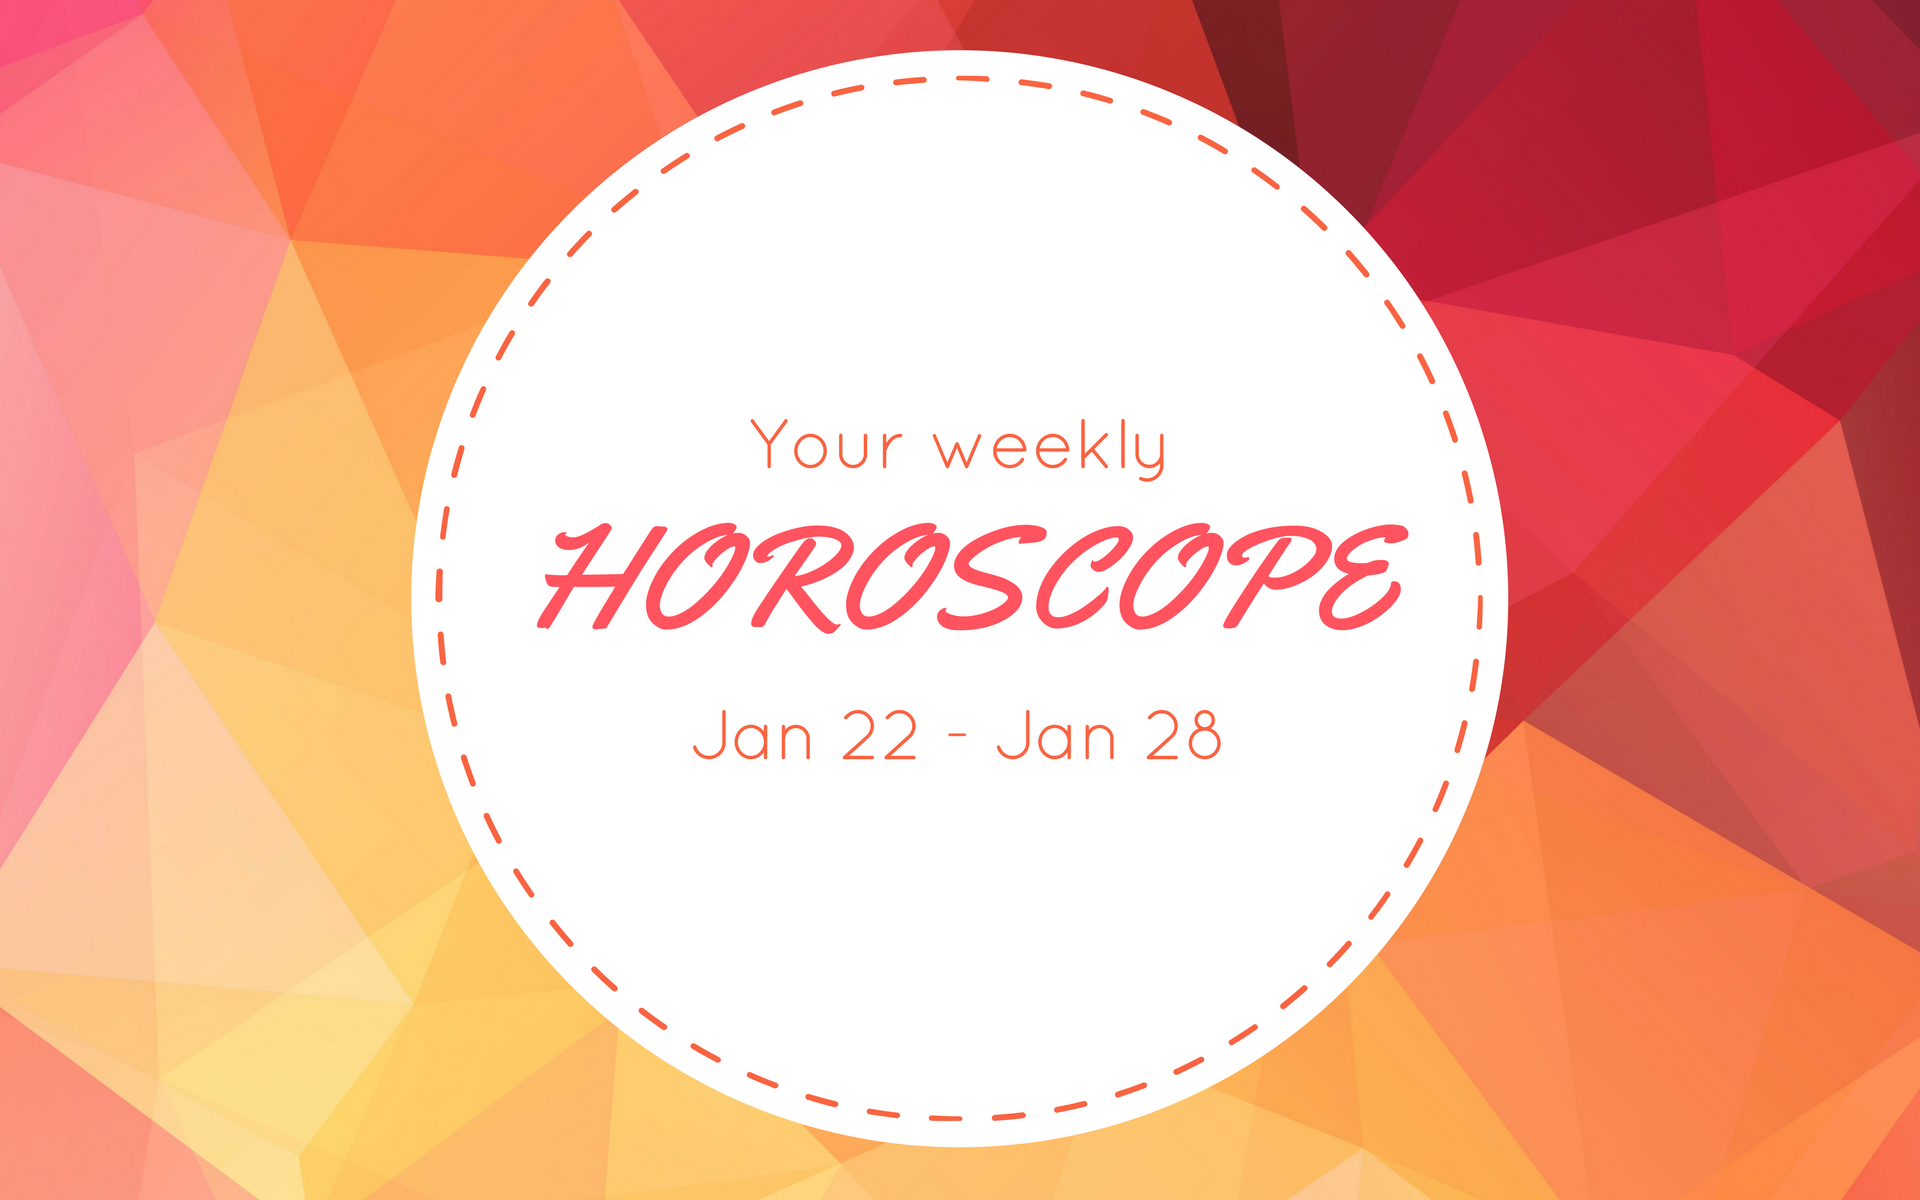 Your Weekly Horoscope: Jan 22 - Jan 28